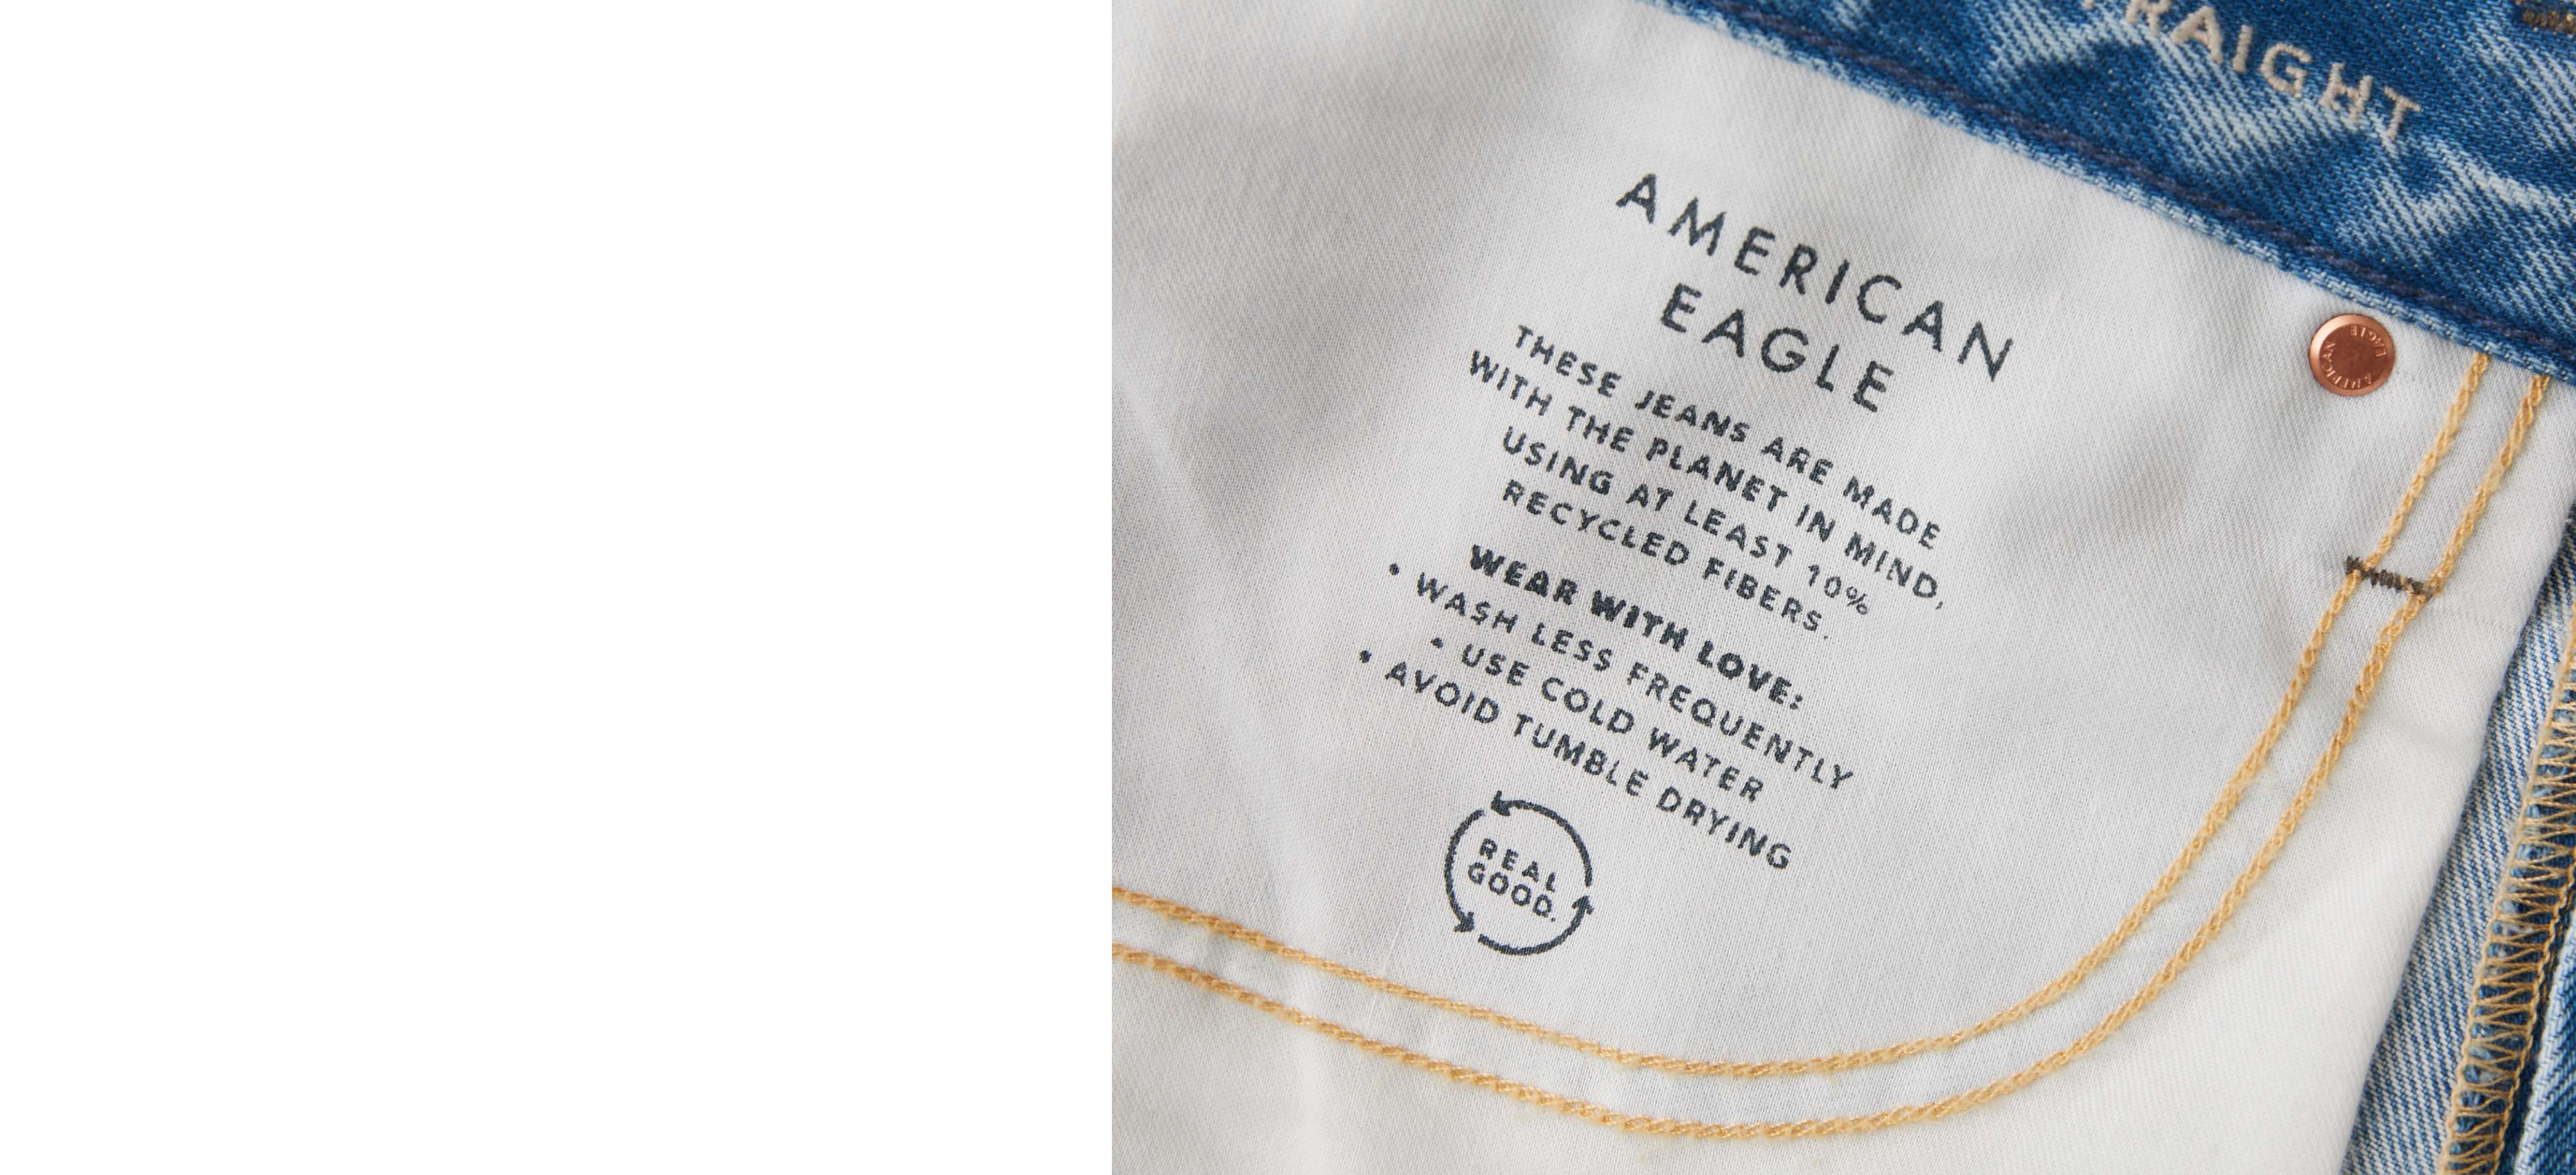 American Eagle Jeans Deals